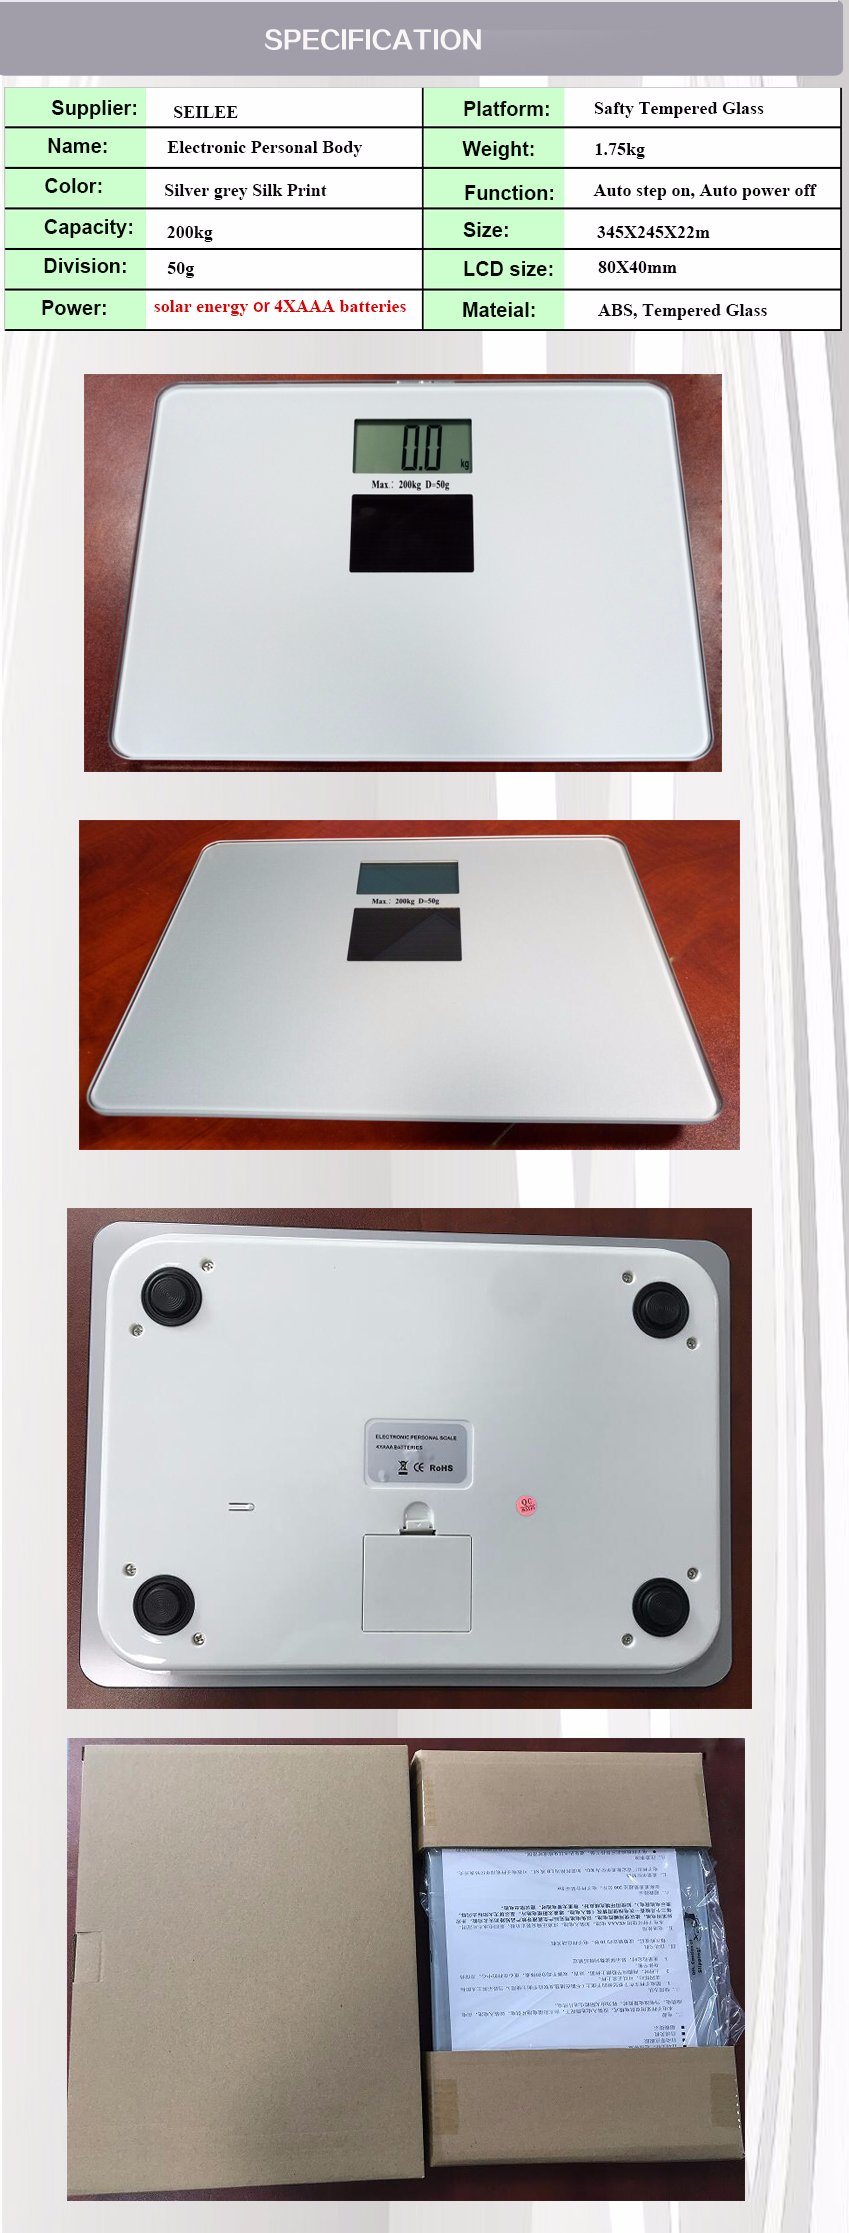 200kg Large Platform Solar Energy Digital Bathroom Health Personal Scale